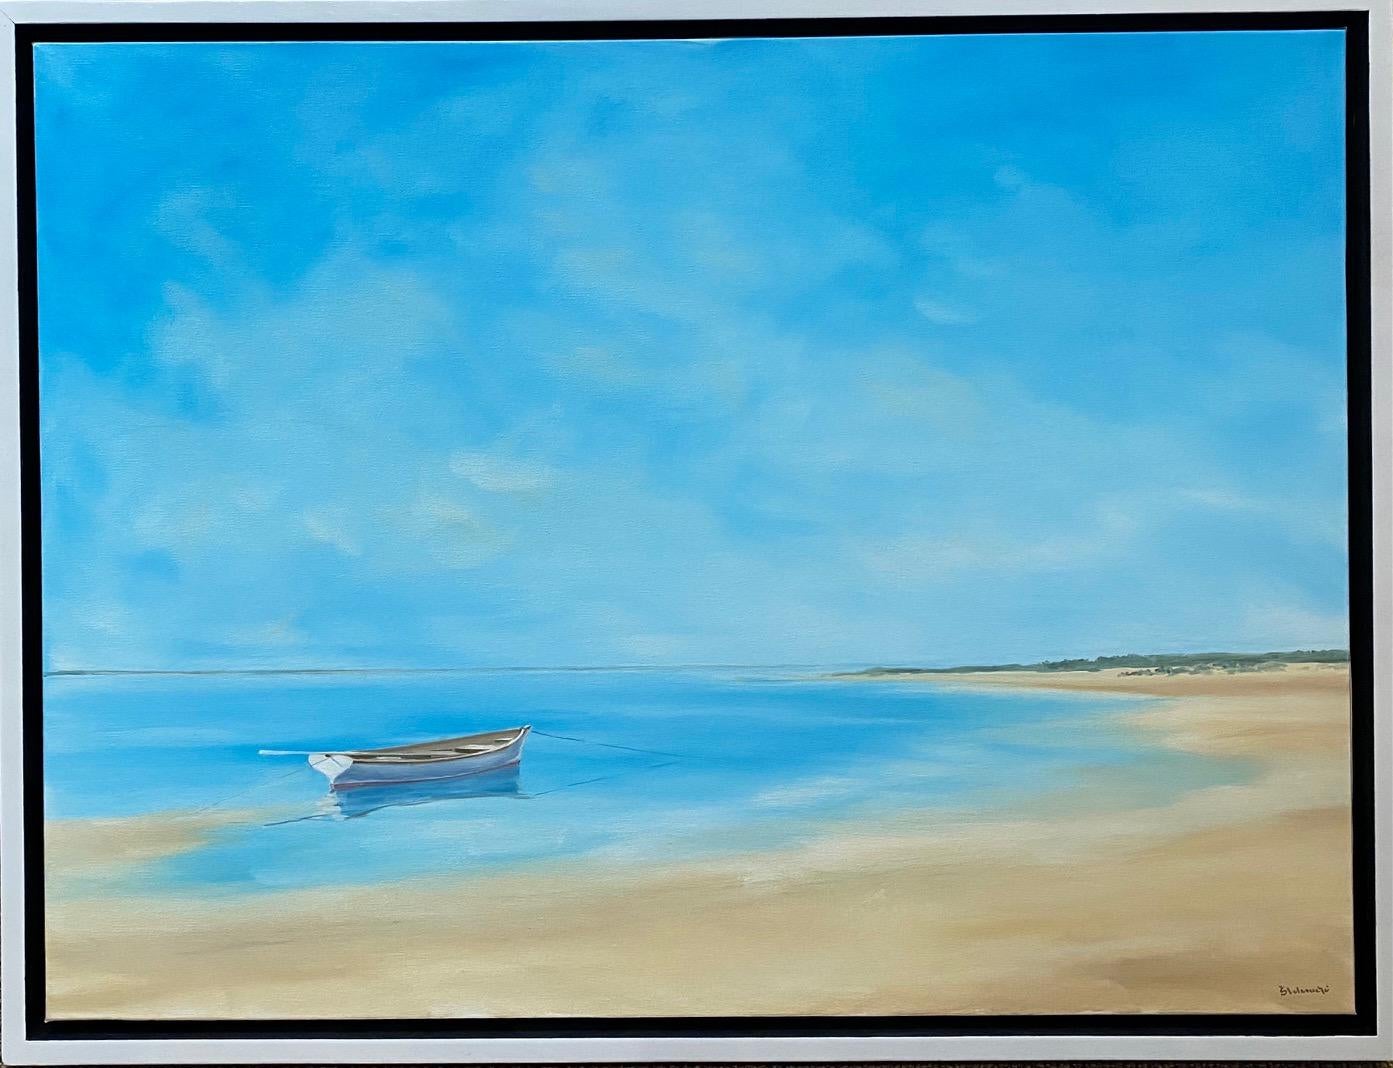 Rinaldo Skalamera Abstract Painting - Sand and Sea, original 30x40 contemporary realist marine landscape